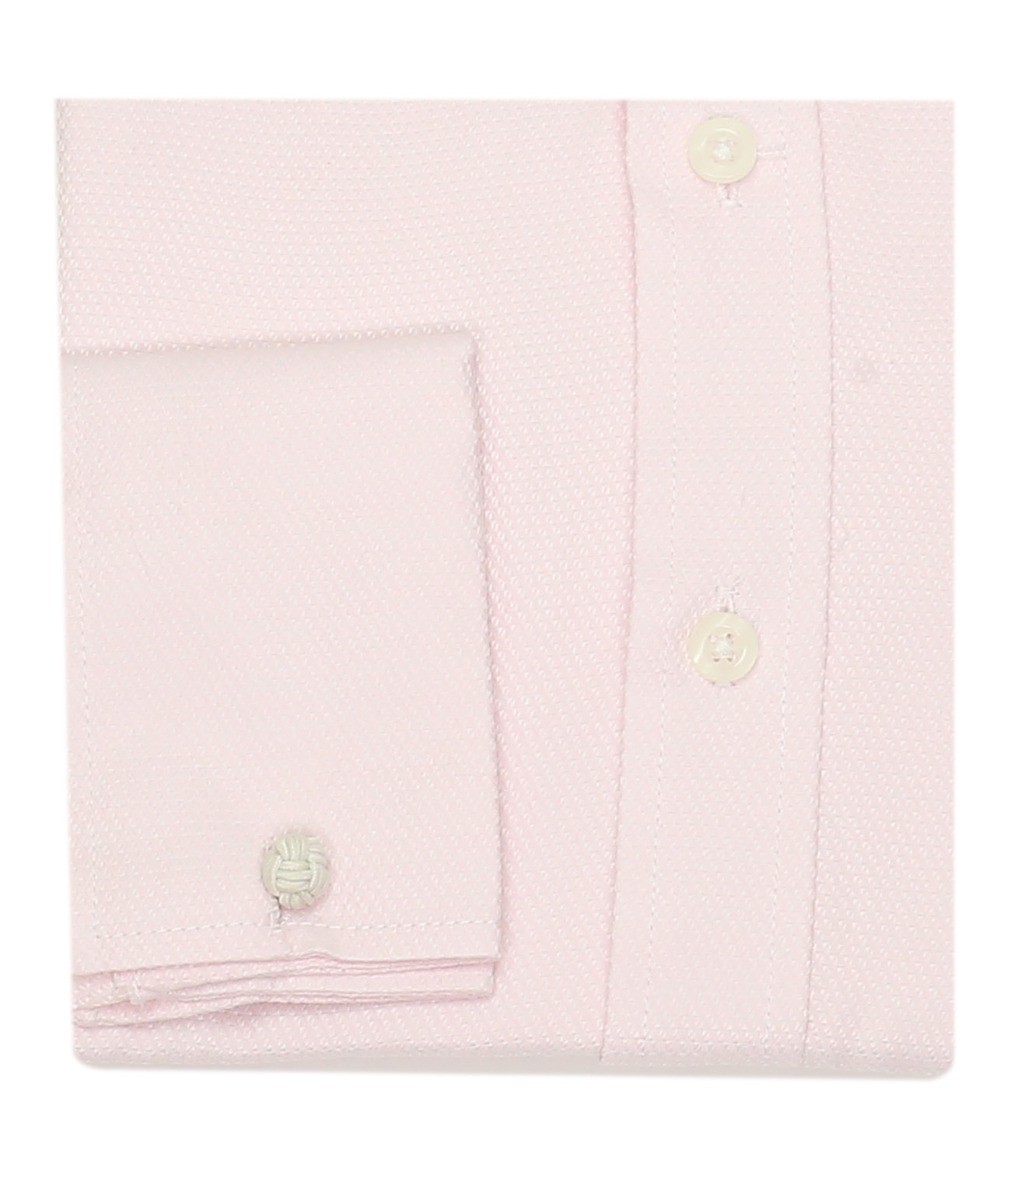 Boys Slim Fit Cotton French Cuff Dress Shirt - Pink